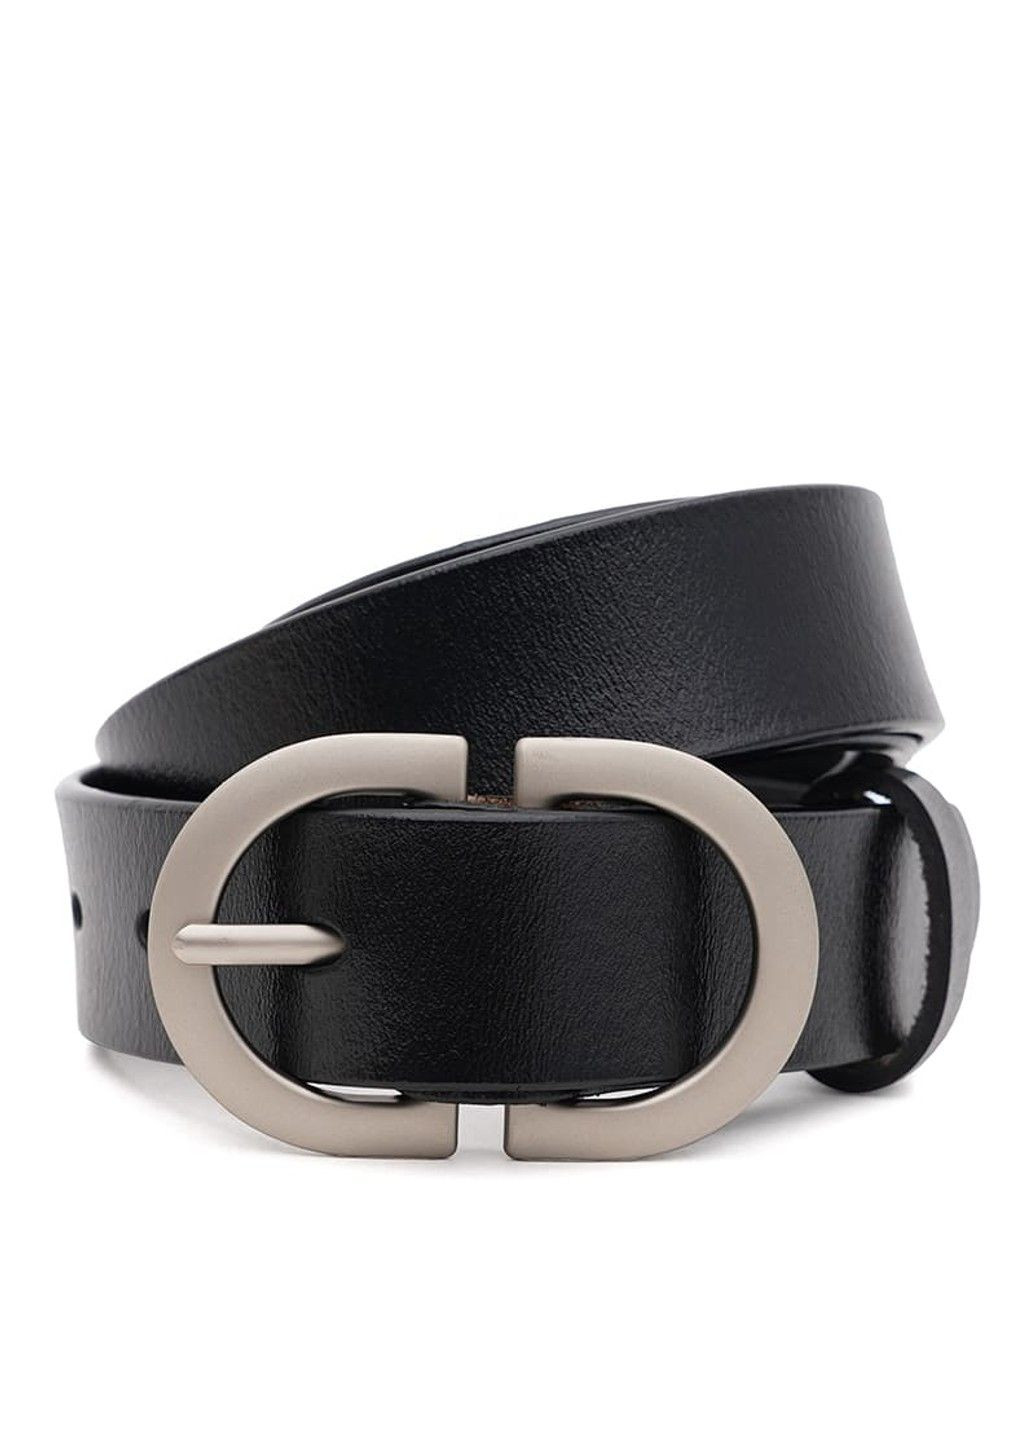 Женский кожаный ремень CV1ZK-105bl-black Borsa Leather (291683080)